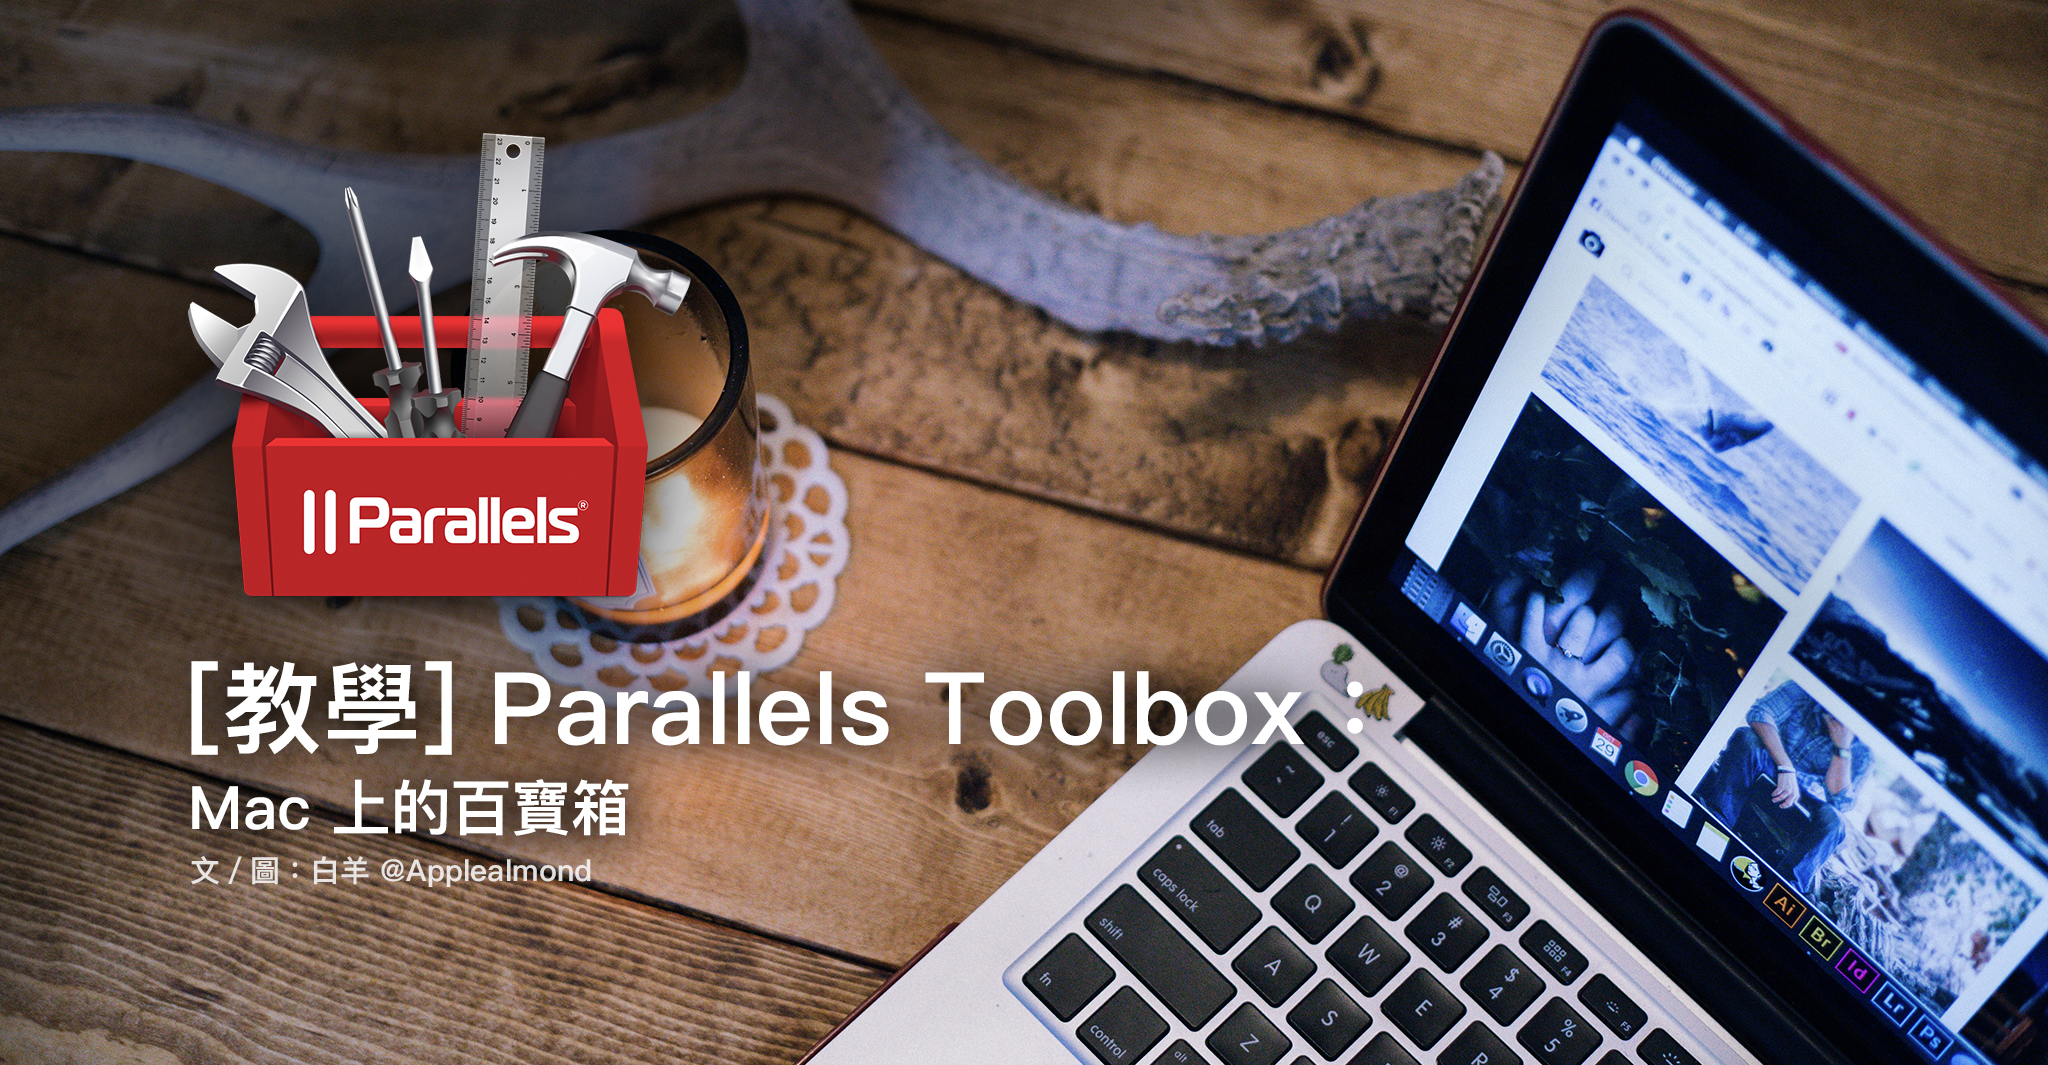 Parallels Desktop 13 Toolbox